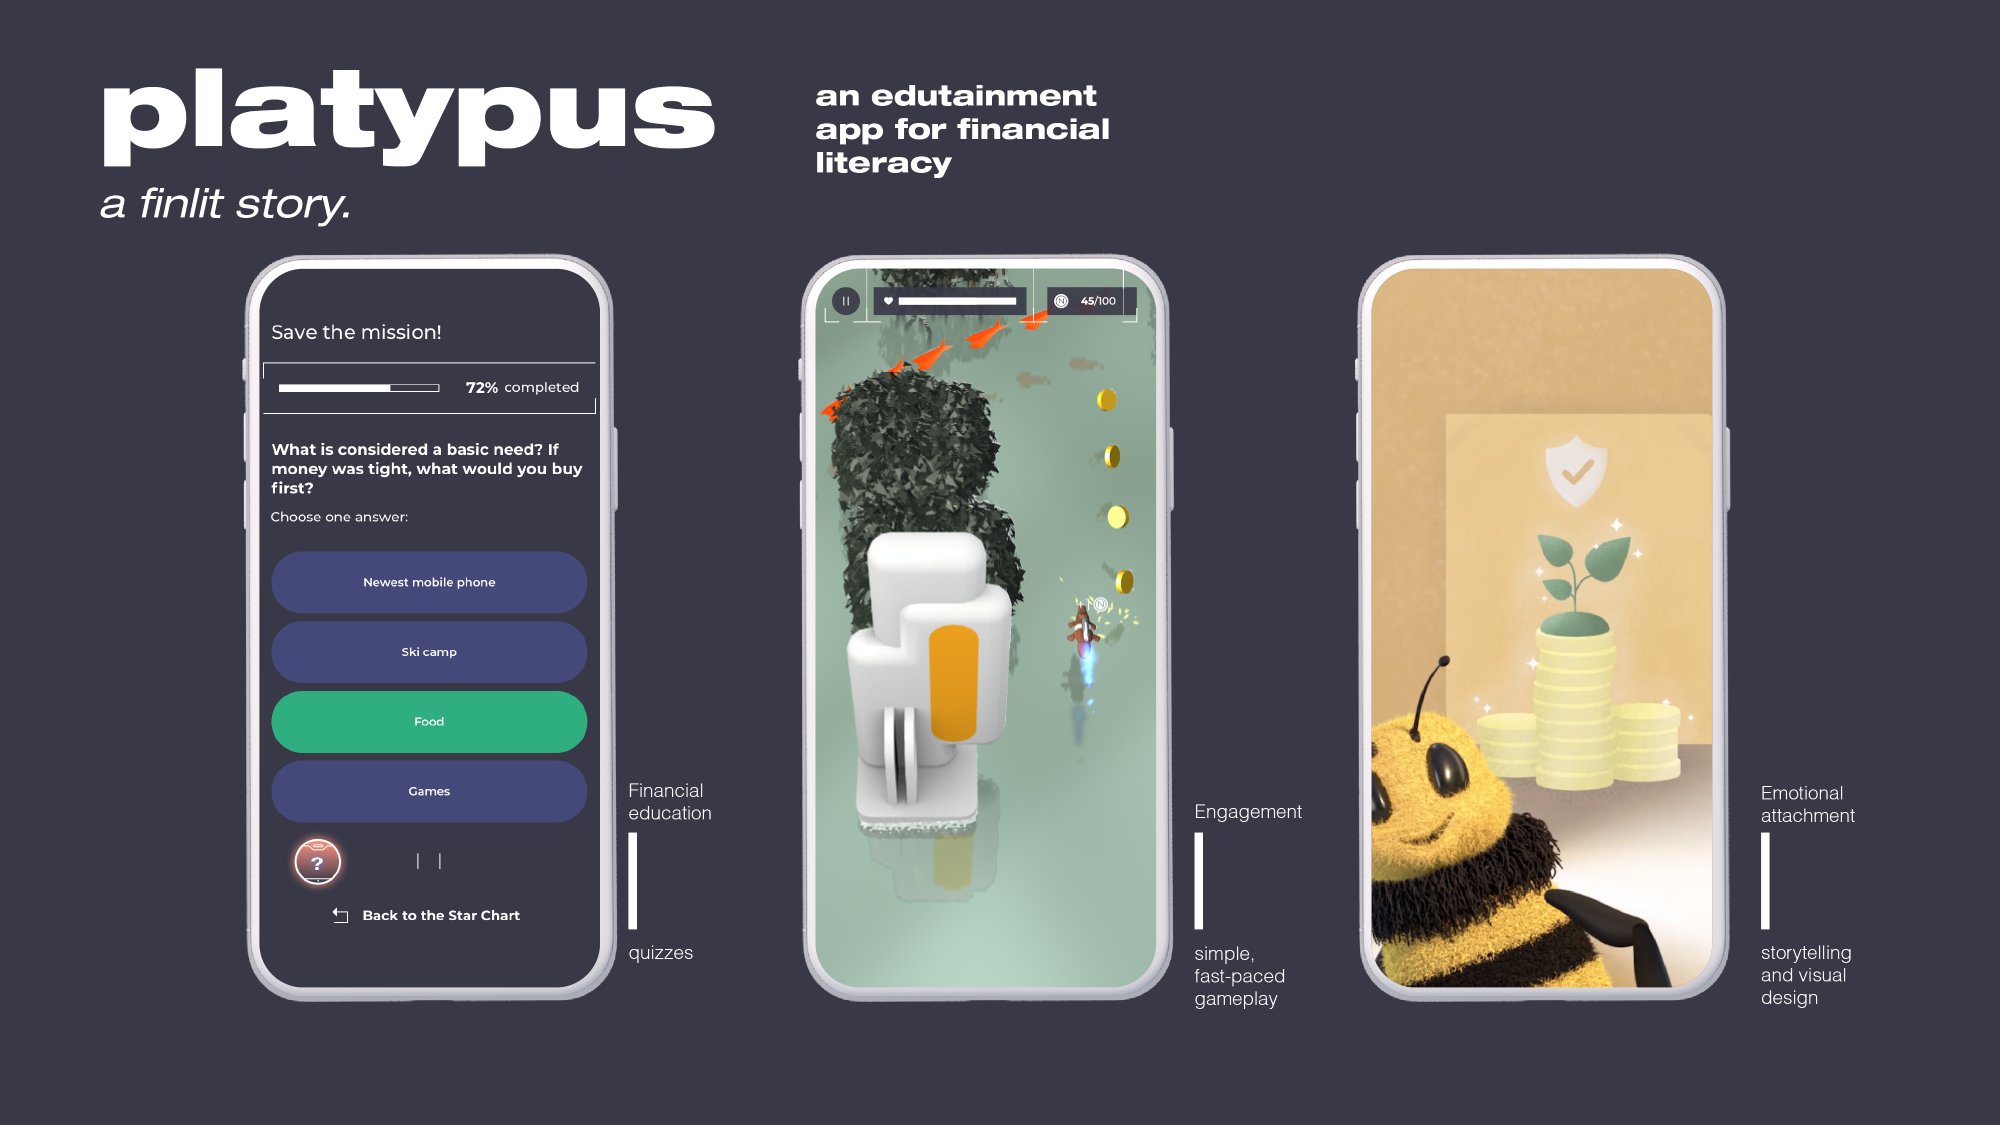 Platypus: an edutainment app for financial literacy